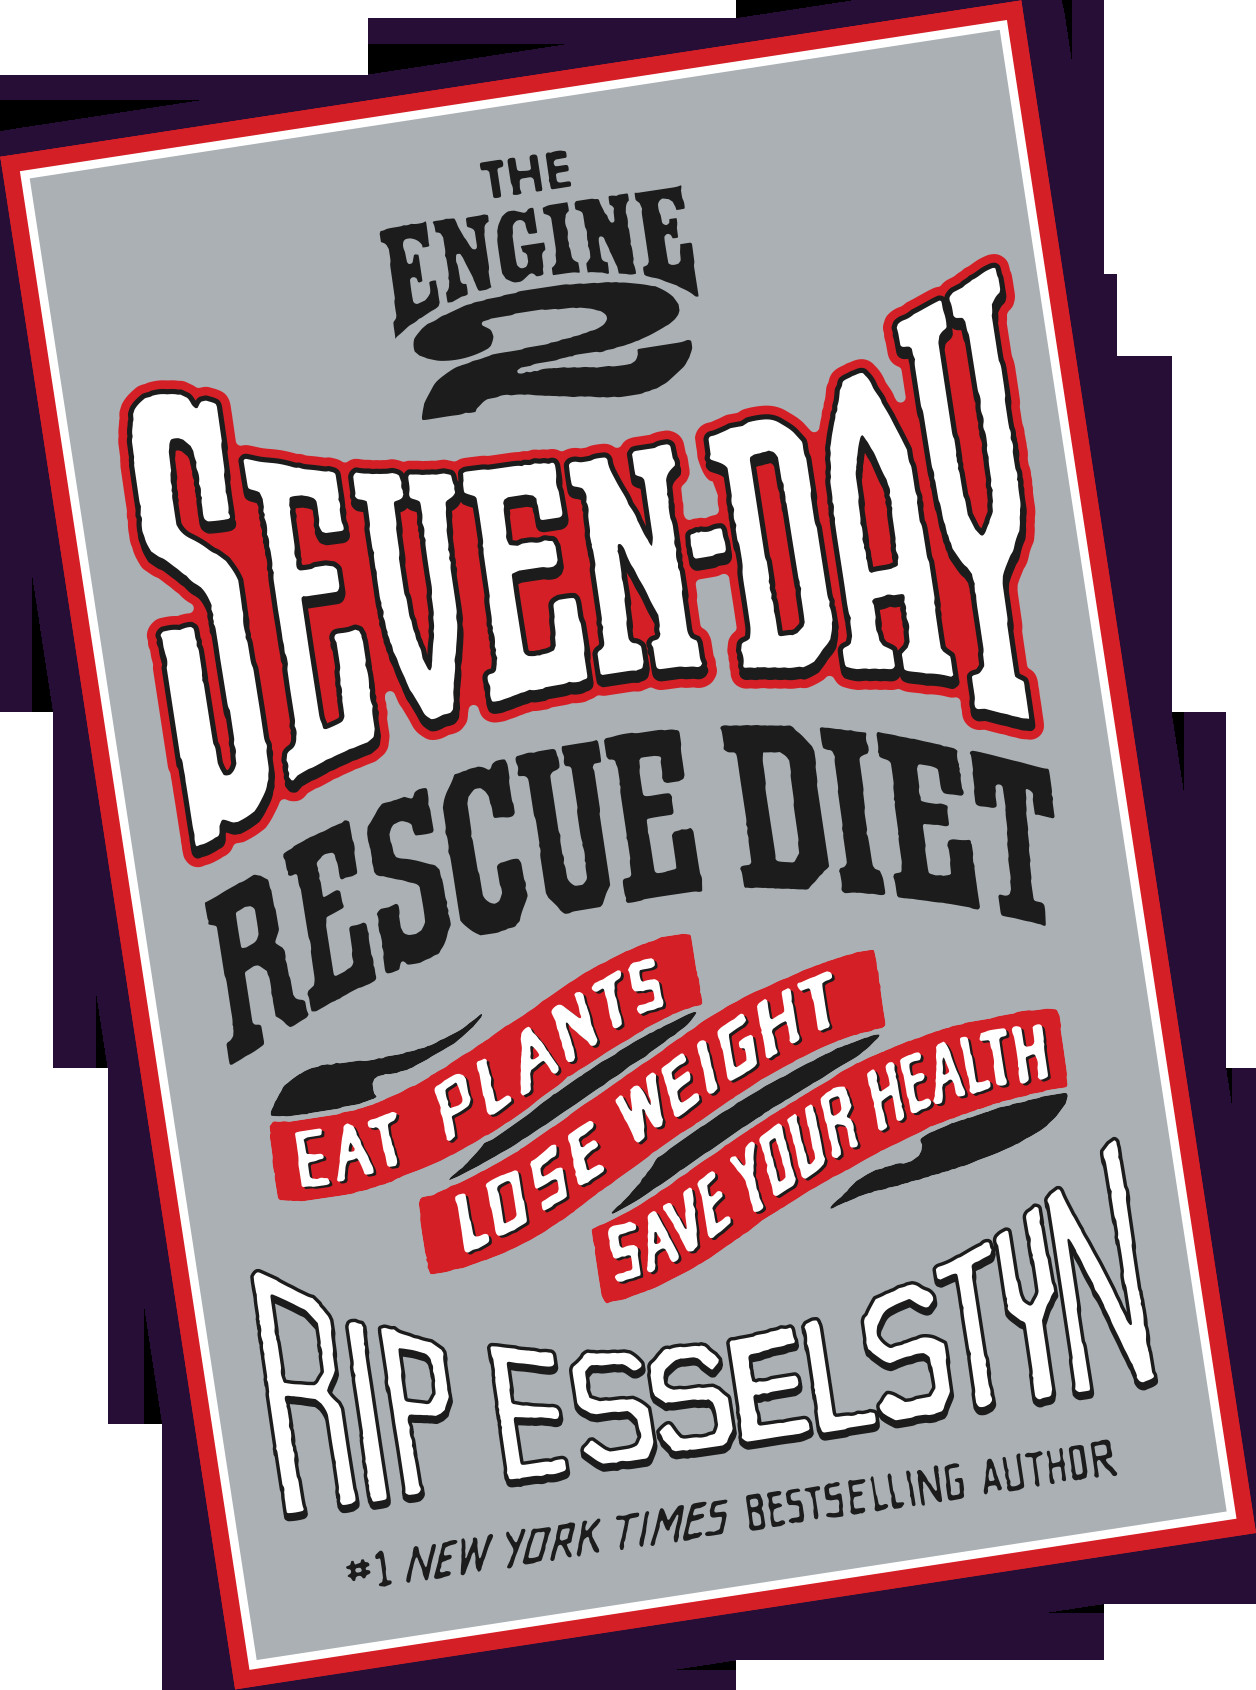 Engine 2 Recipes Rip Esselstyn Plant Based Diet
 Engine 2 – The Engine 2 Diet